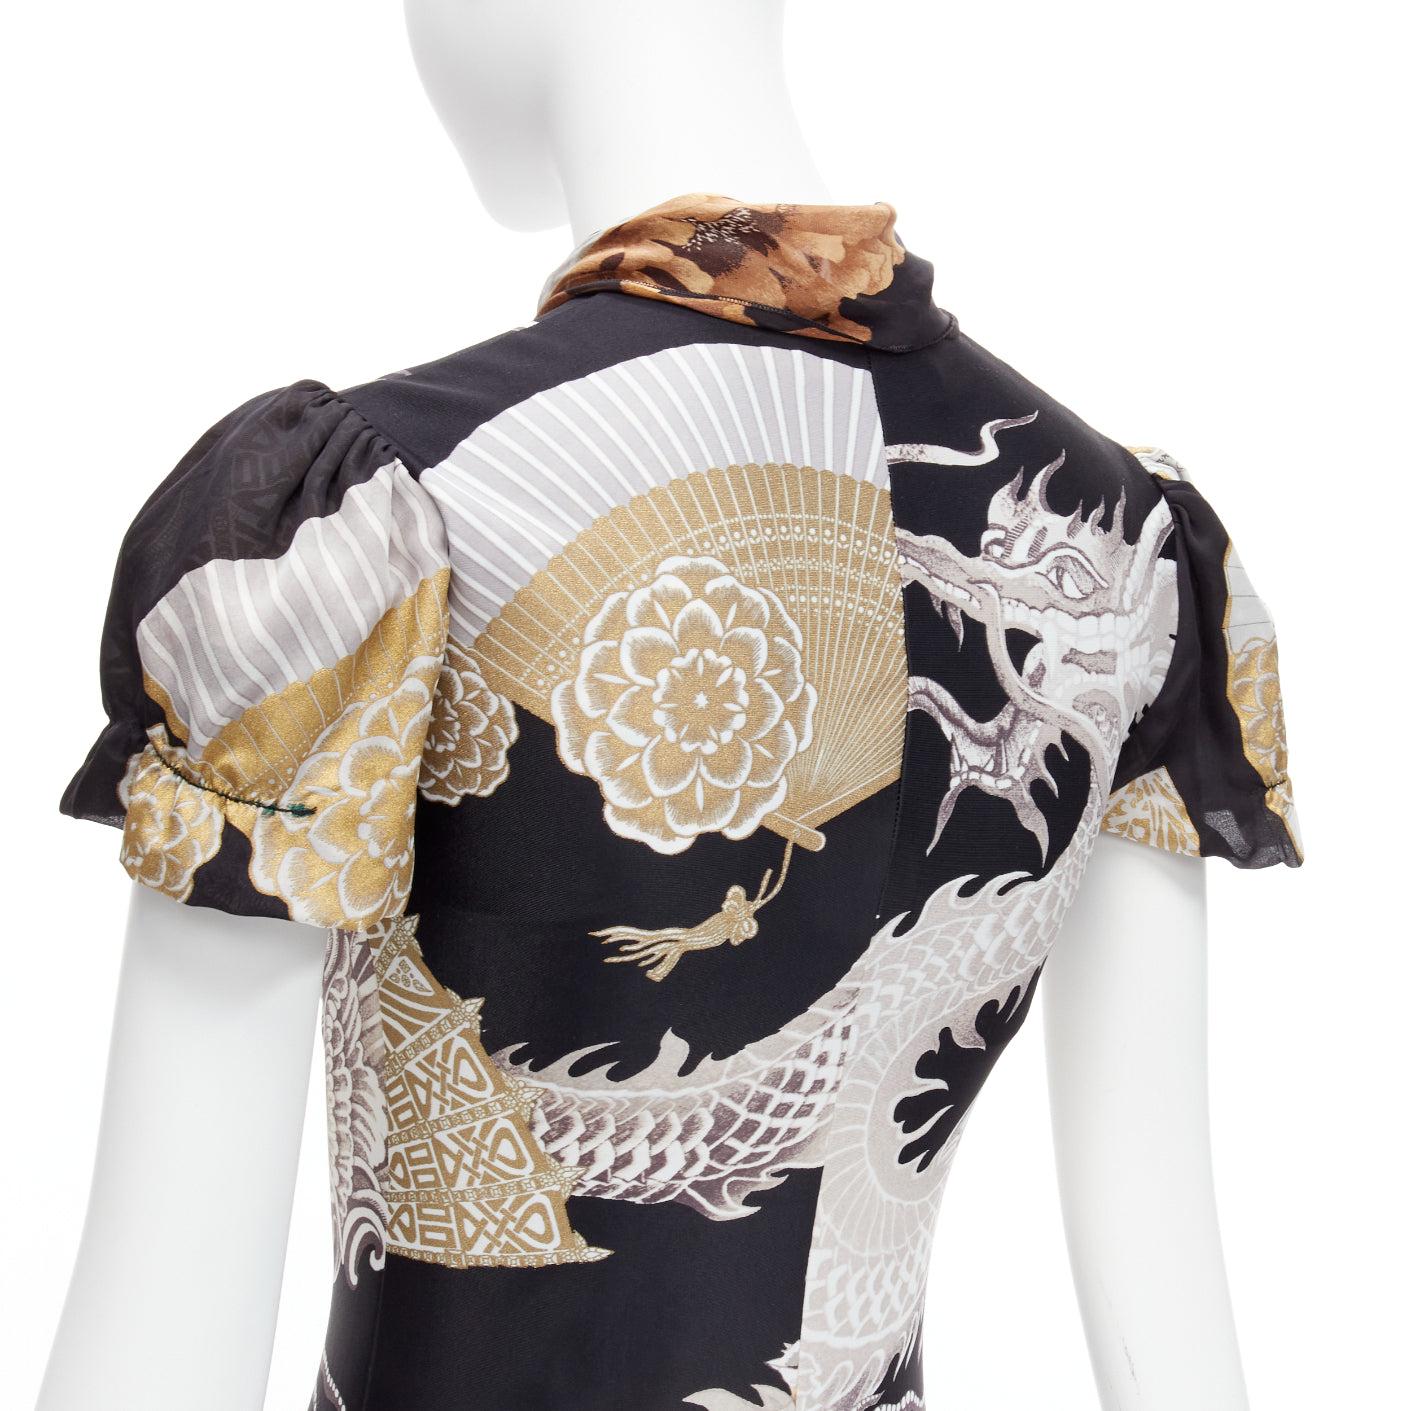 ROBERTO CAVALLI 2005 Vintage black dragon oriental print silk neck qipao dress IT42 M
Reference: TGAS/D00512
Brand: Roberto Cavalli
Designer: Roberto Cavalli
Collection: 2005
Material: Silk, Polyamide, Blend
Color: Black, Gold
Pattern: